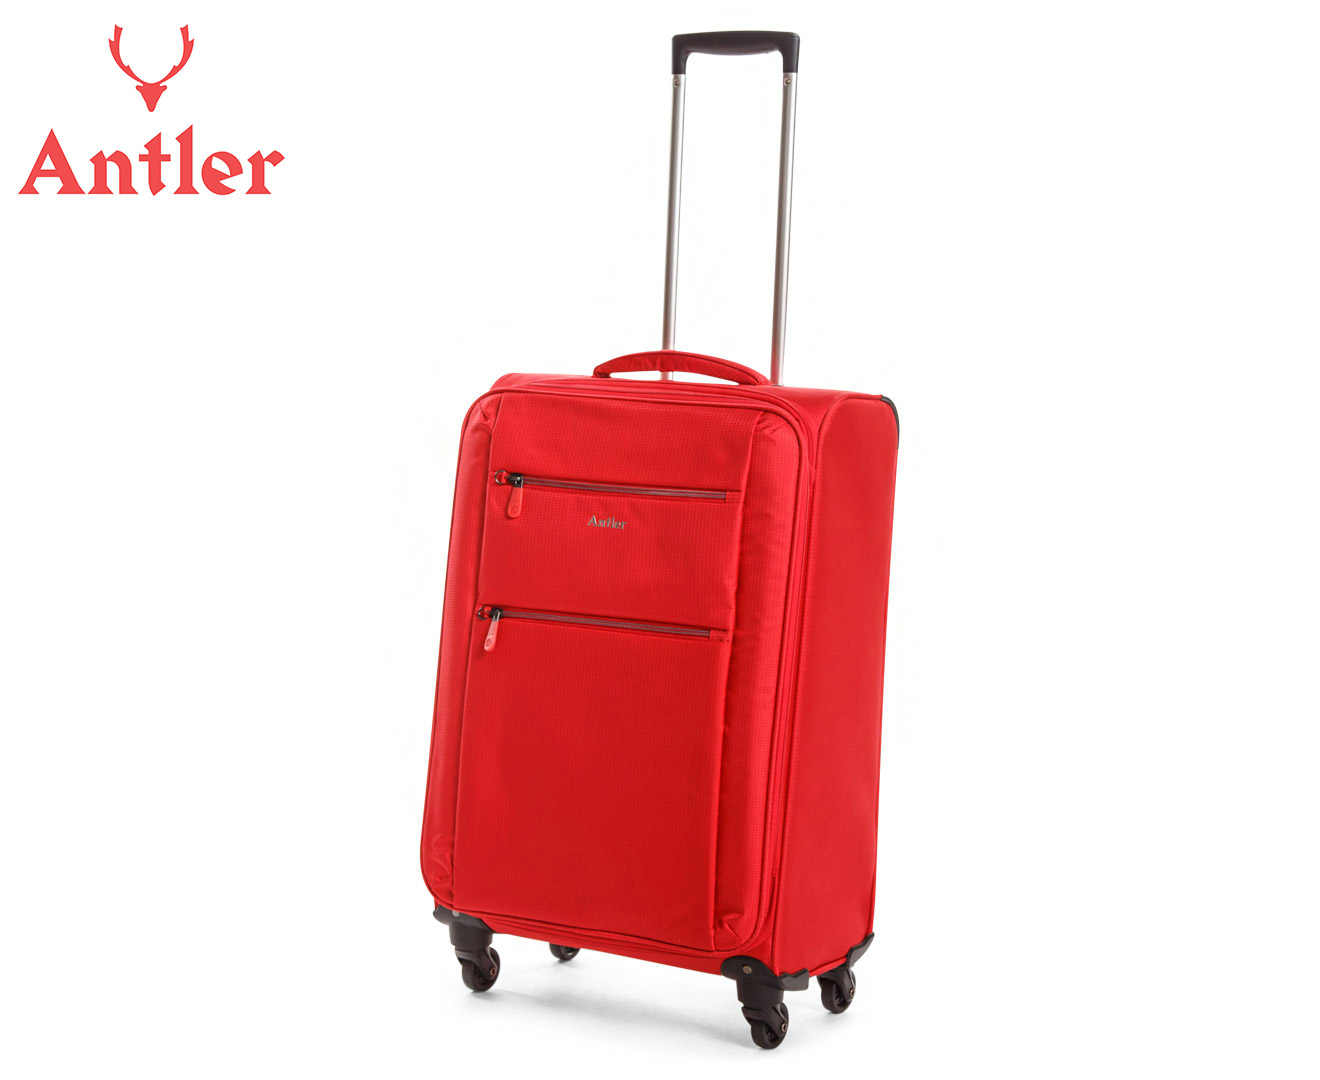 Antler Aeon 4W 67cm Rollercase - Red